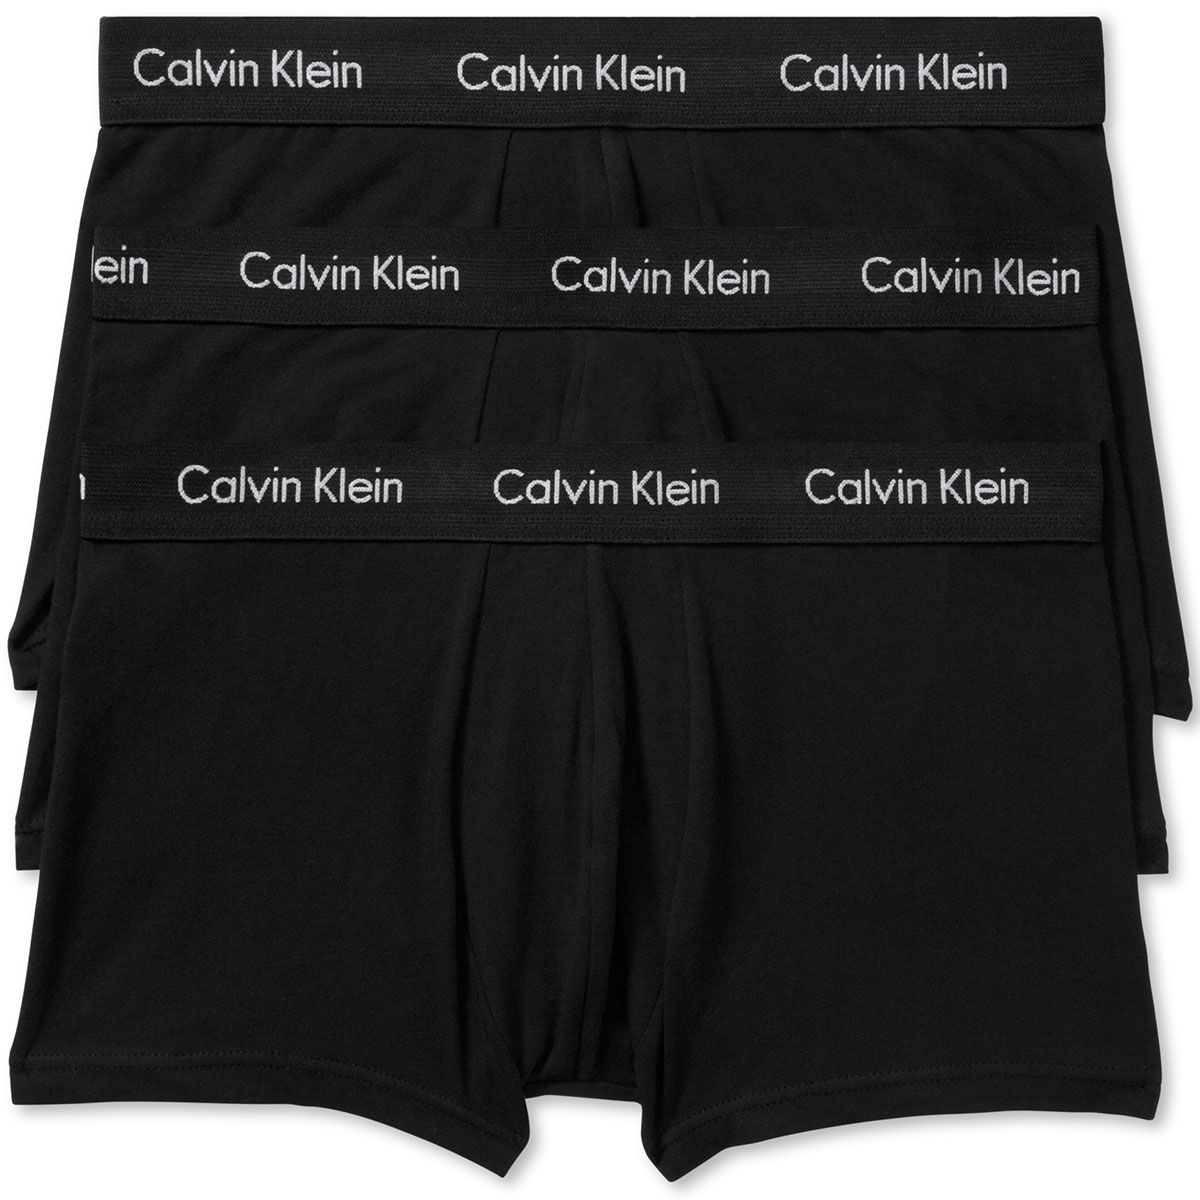 Calvin Klein Men's Stretch Low-Rise Trunks, 3-Pack